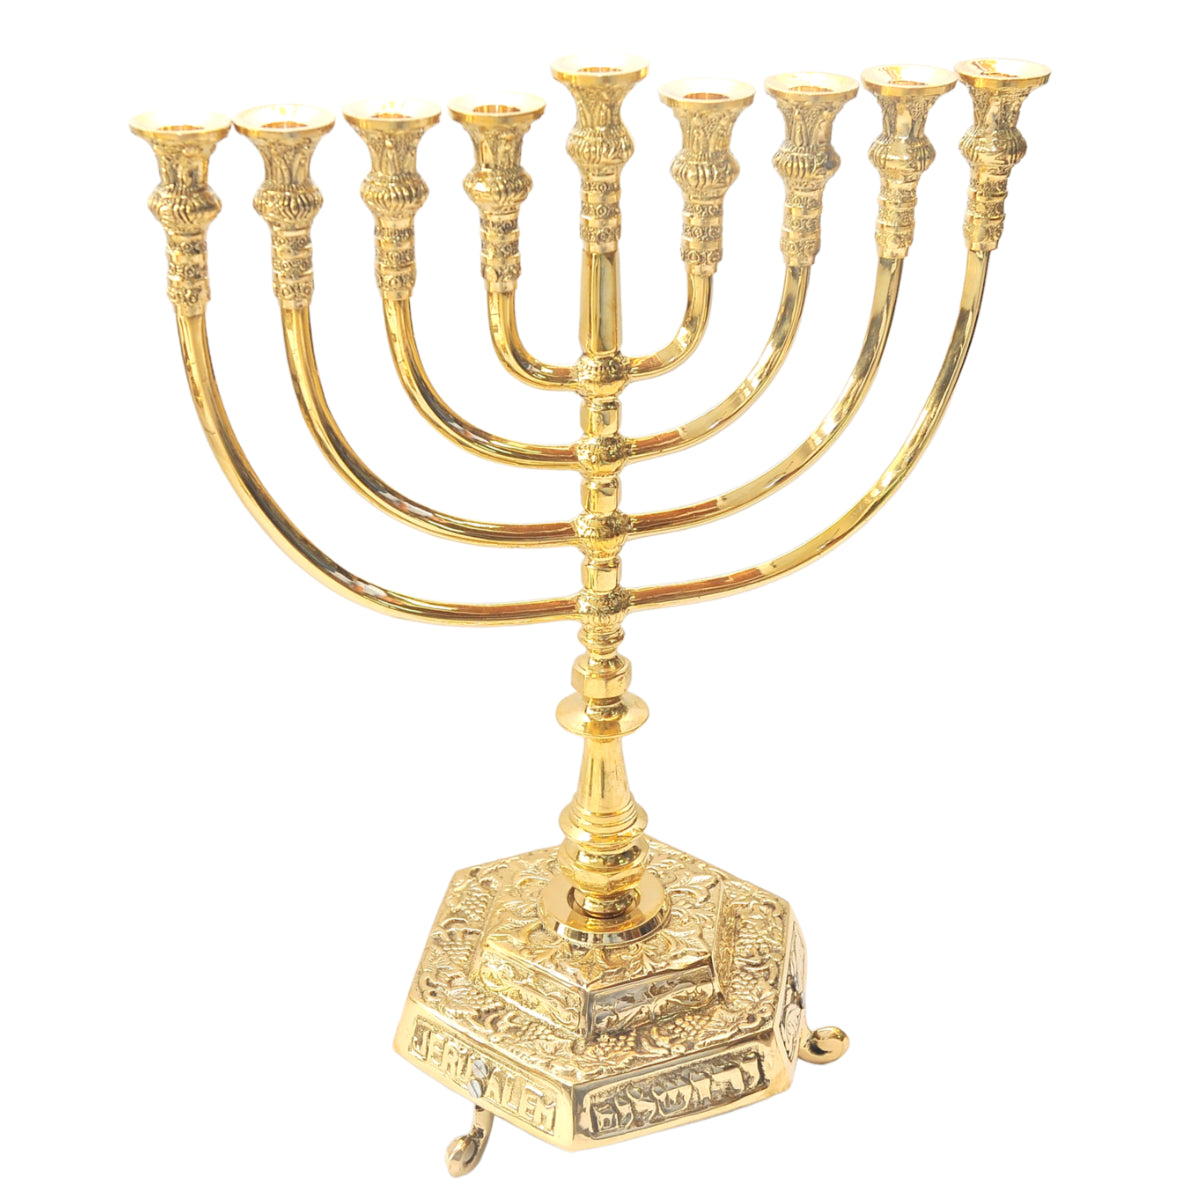 Menorah Hanukkiah Temple Gold Plated Candle Holder from Jerusalem 17 inch